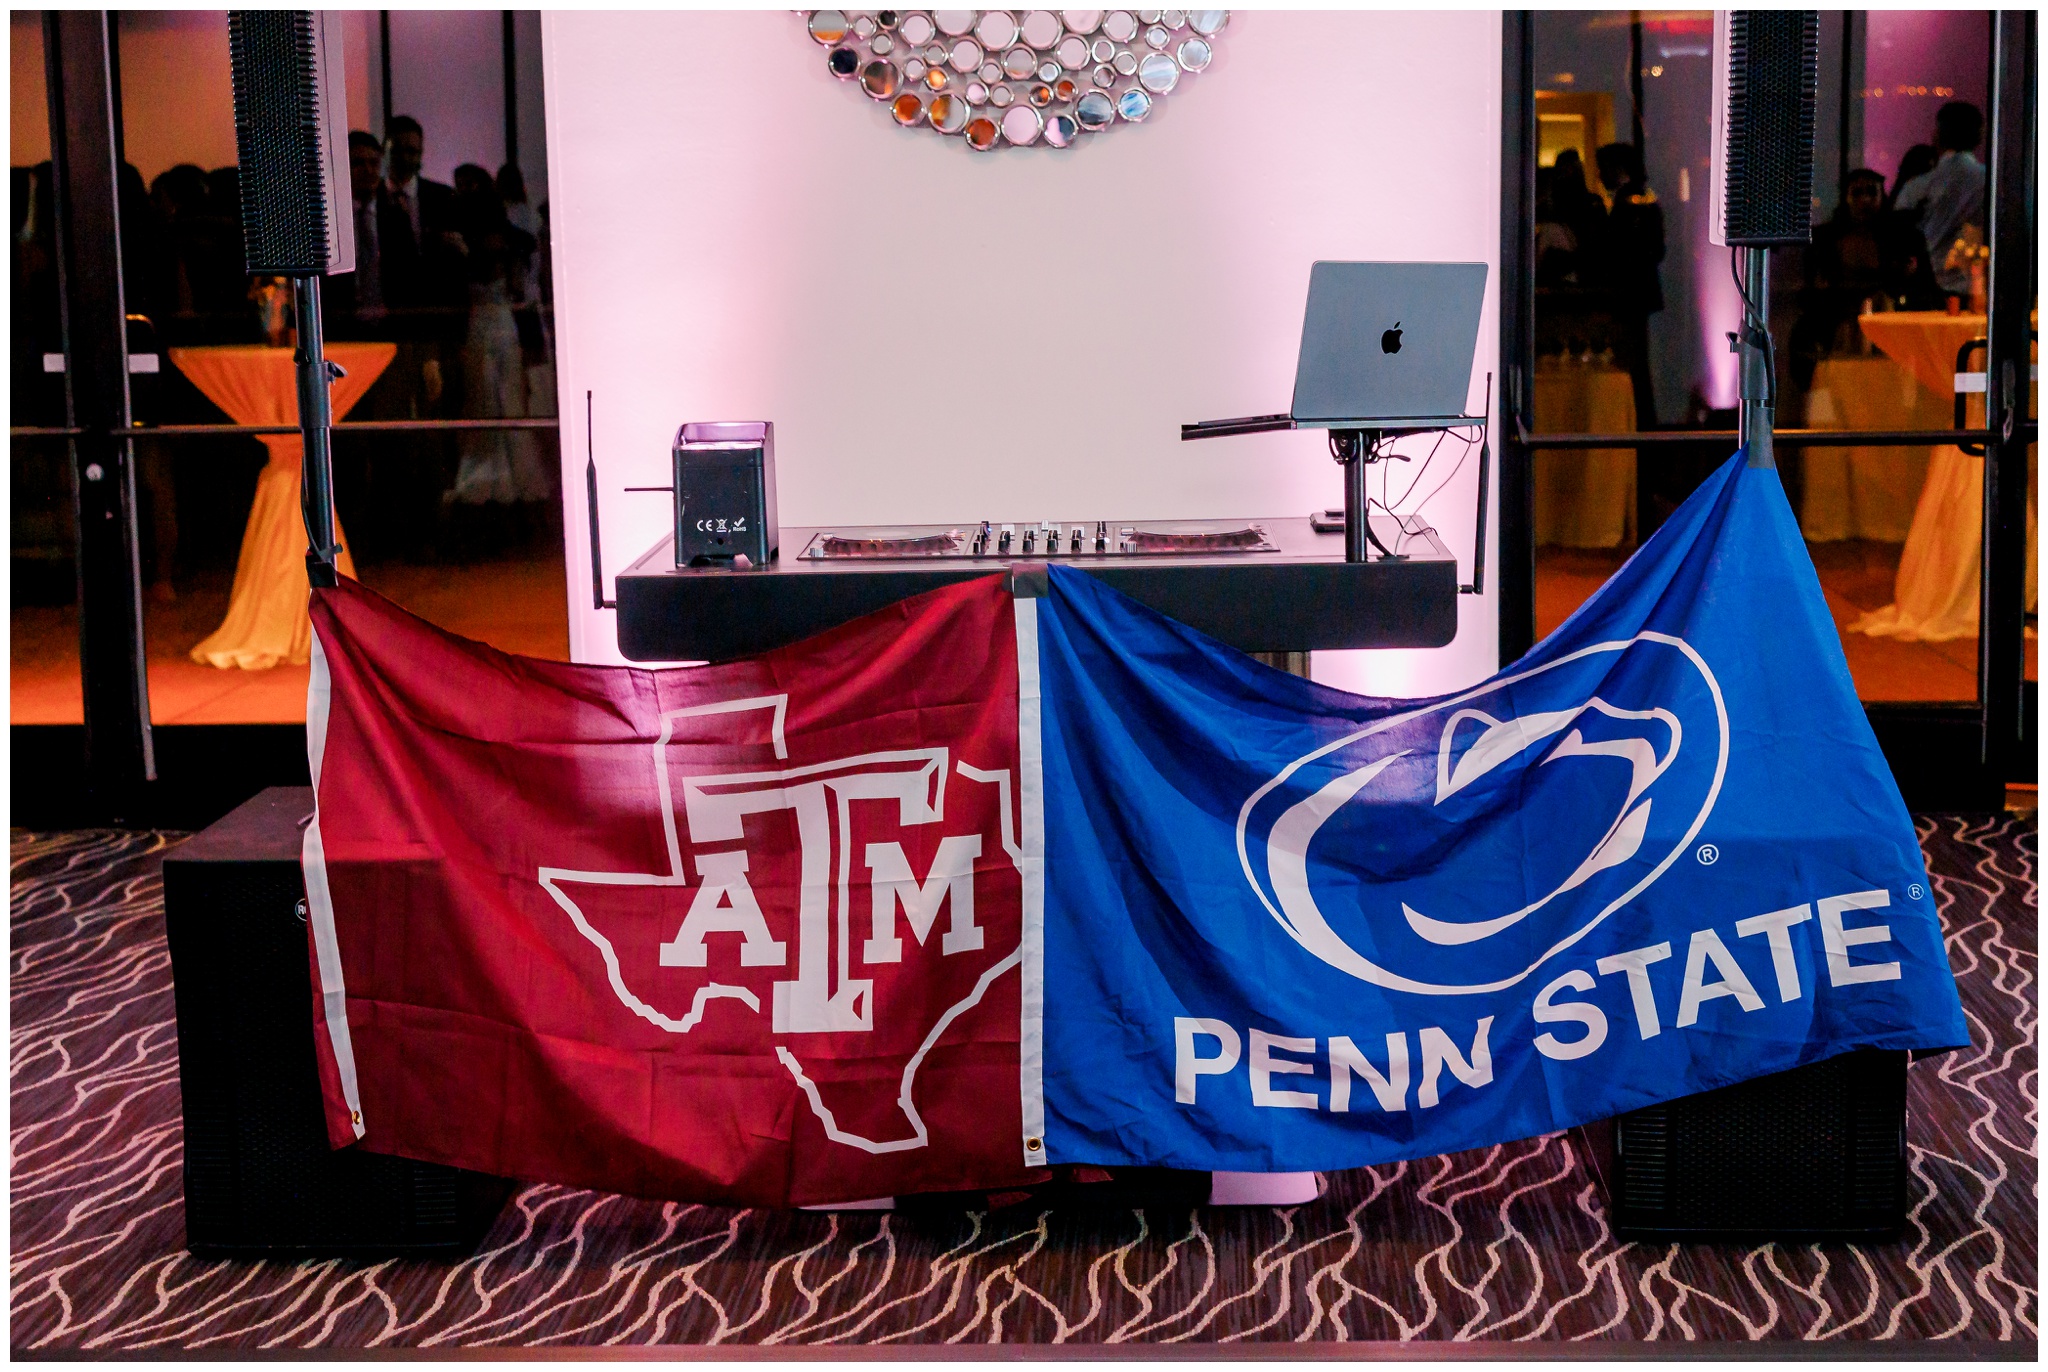 Texas A&M flag hung next to Penn State flag on DJ Booth